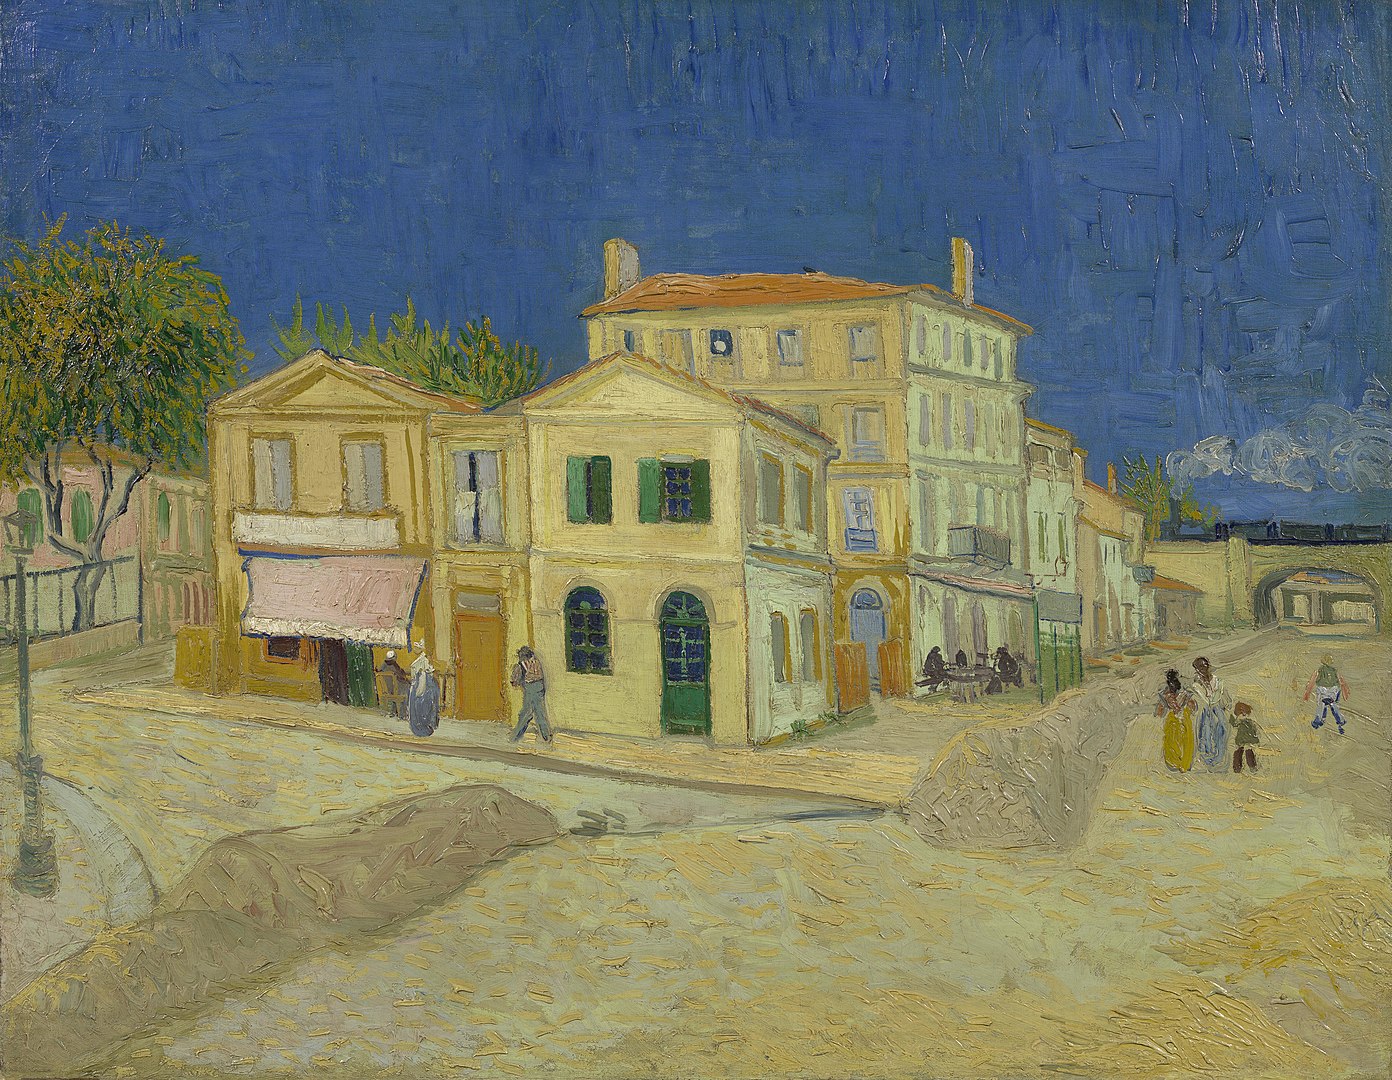 The Yellow House, van Gogh